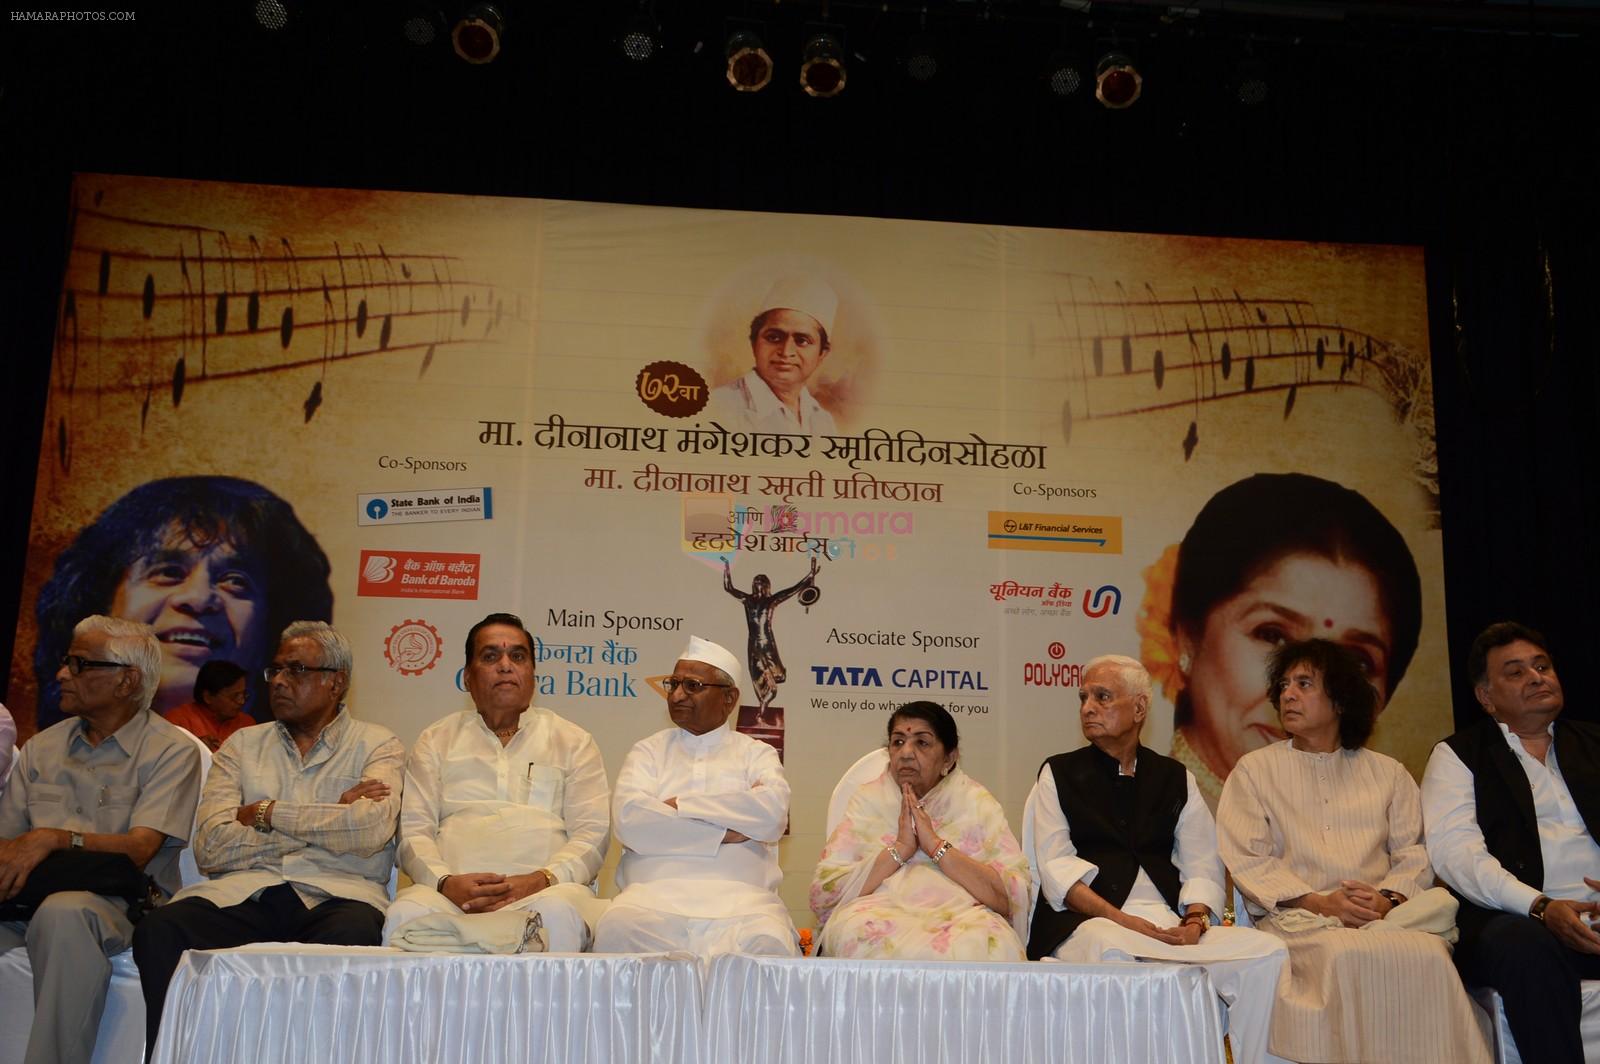 Zakir Hussain, Lata Mangeshkar, rishi Kapoor, Anna Hazare at Master Deenanath Mangeshkar awards in Mumbai on 24th April 2014